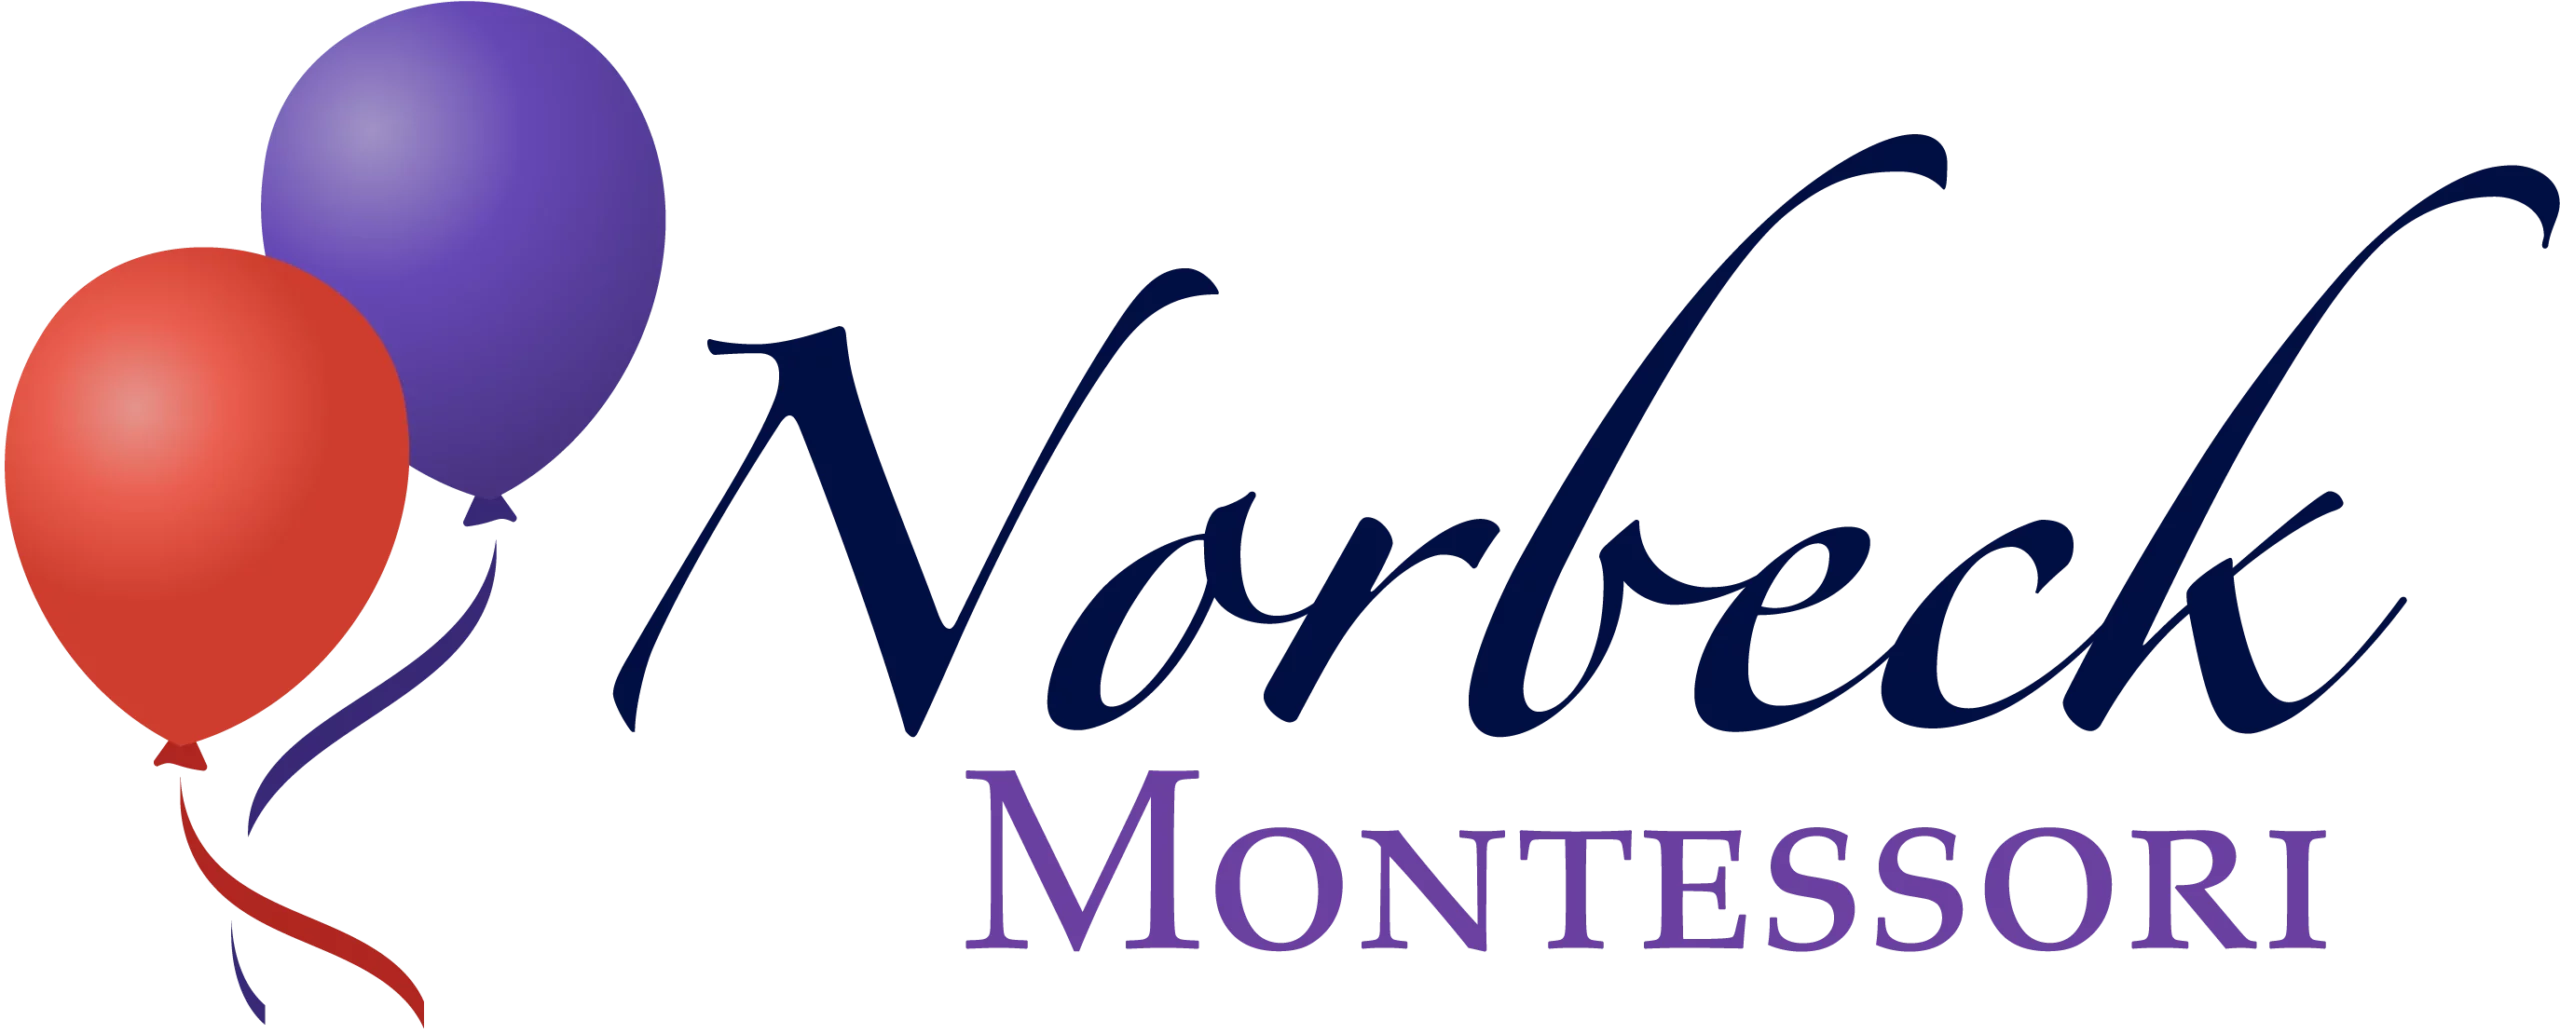 Norbeck company logo image